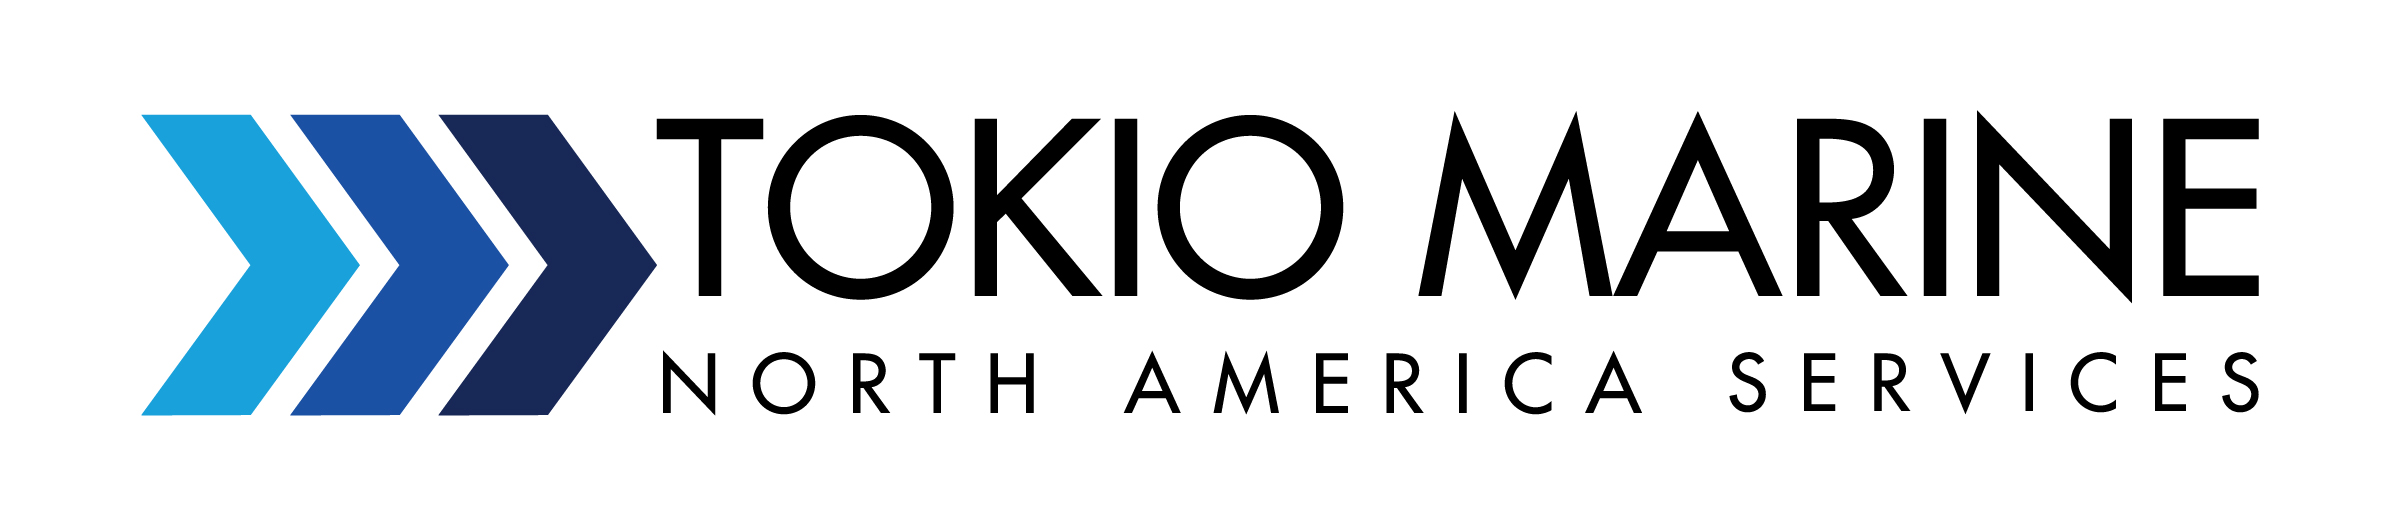 Tokio Marine North America Services Company Logo